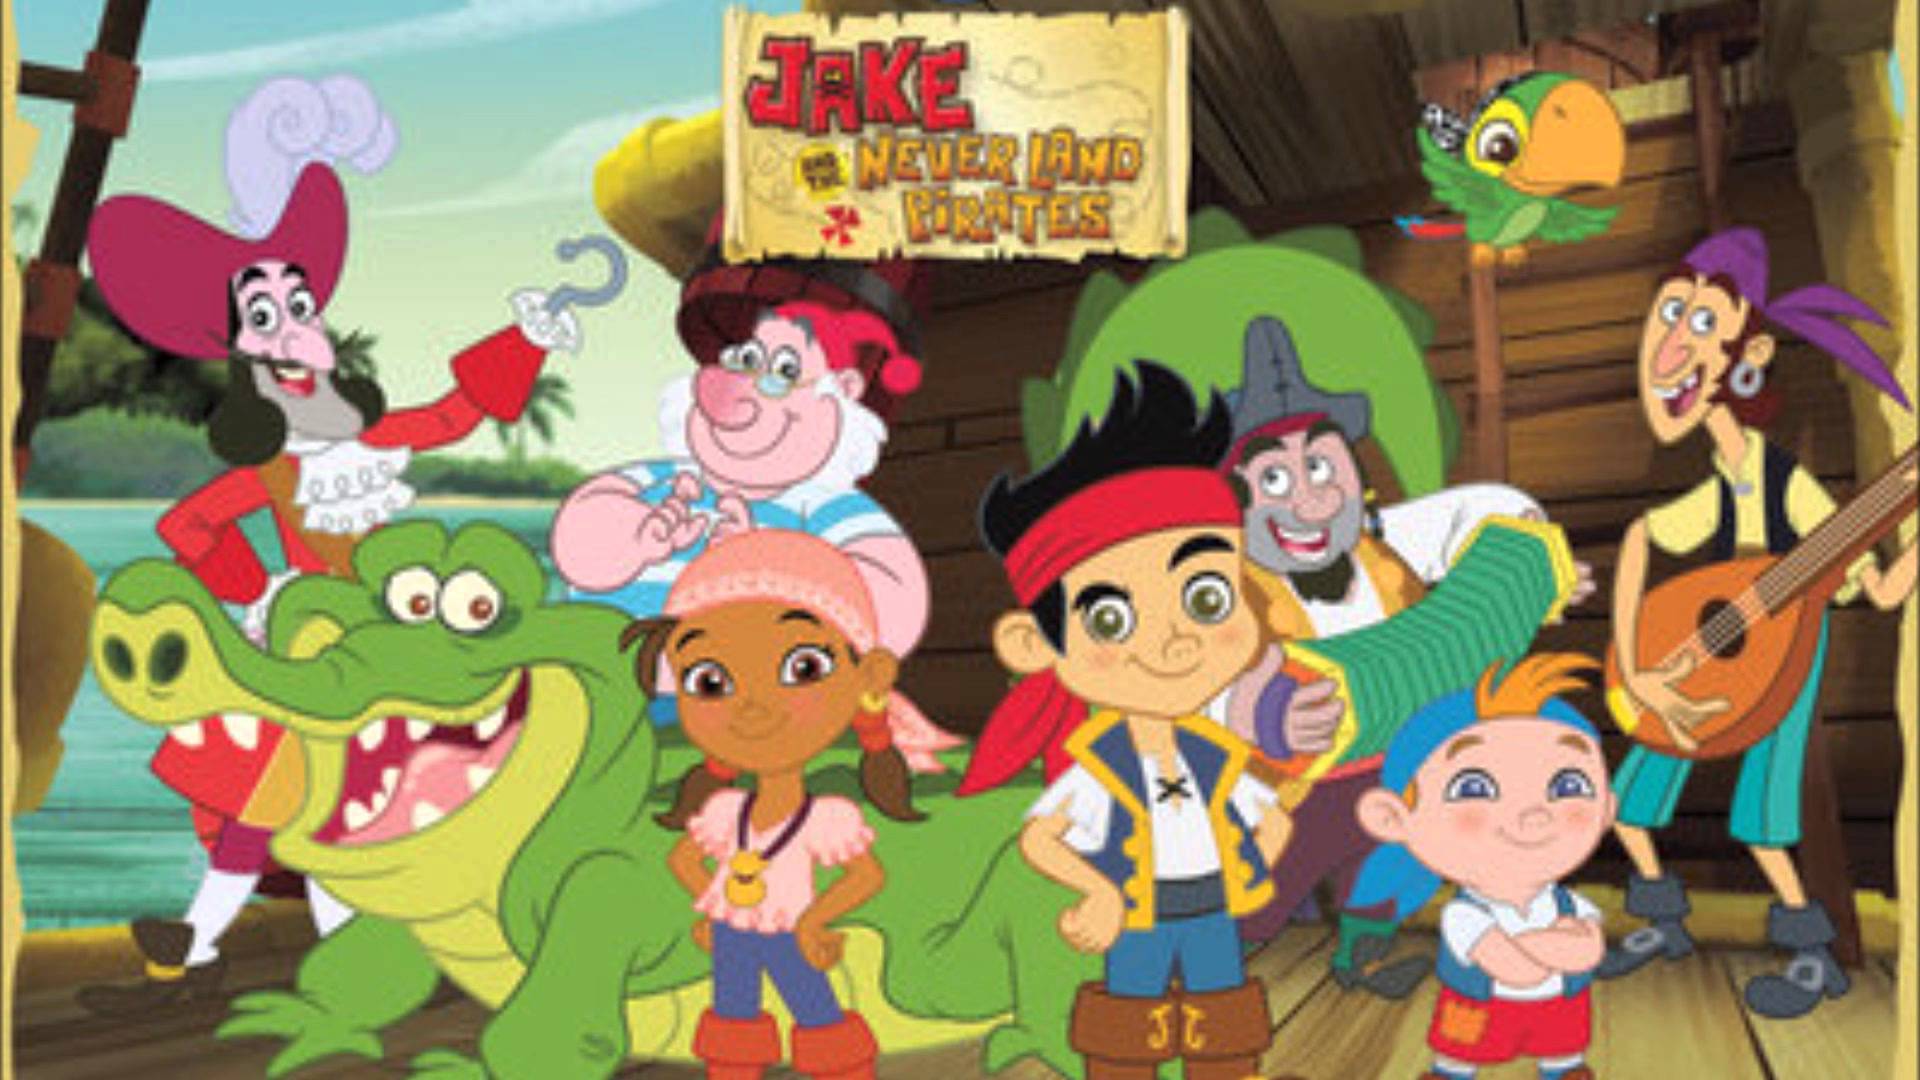 Jake and the Neverland pirates- Neverland Pirate Band